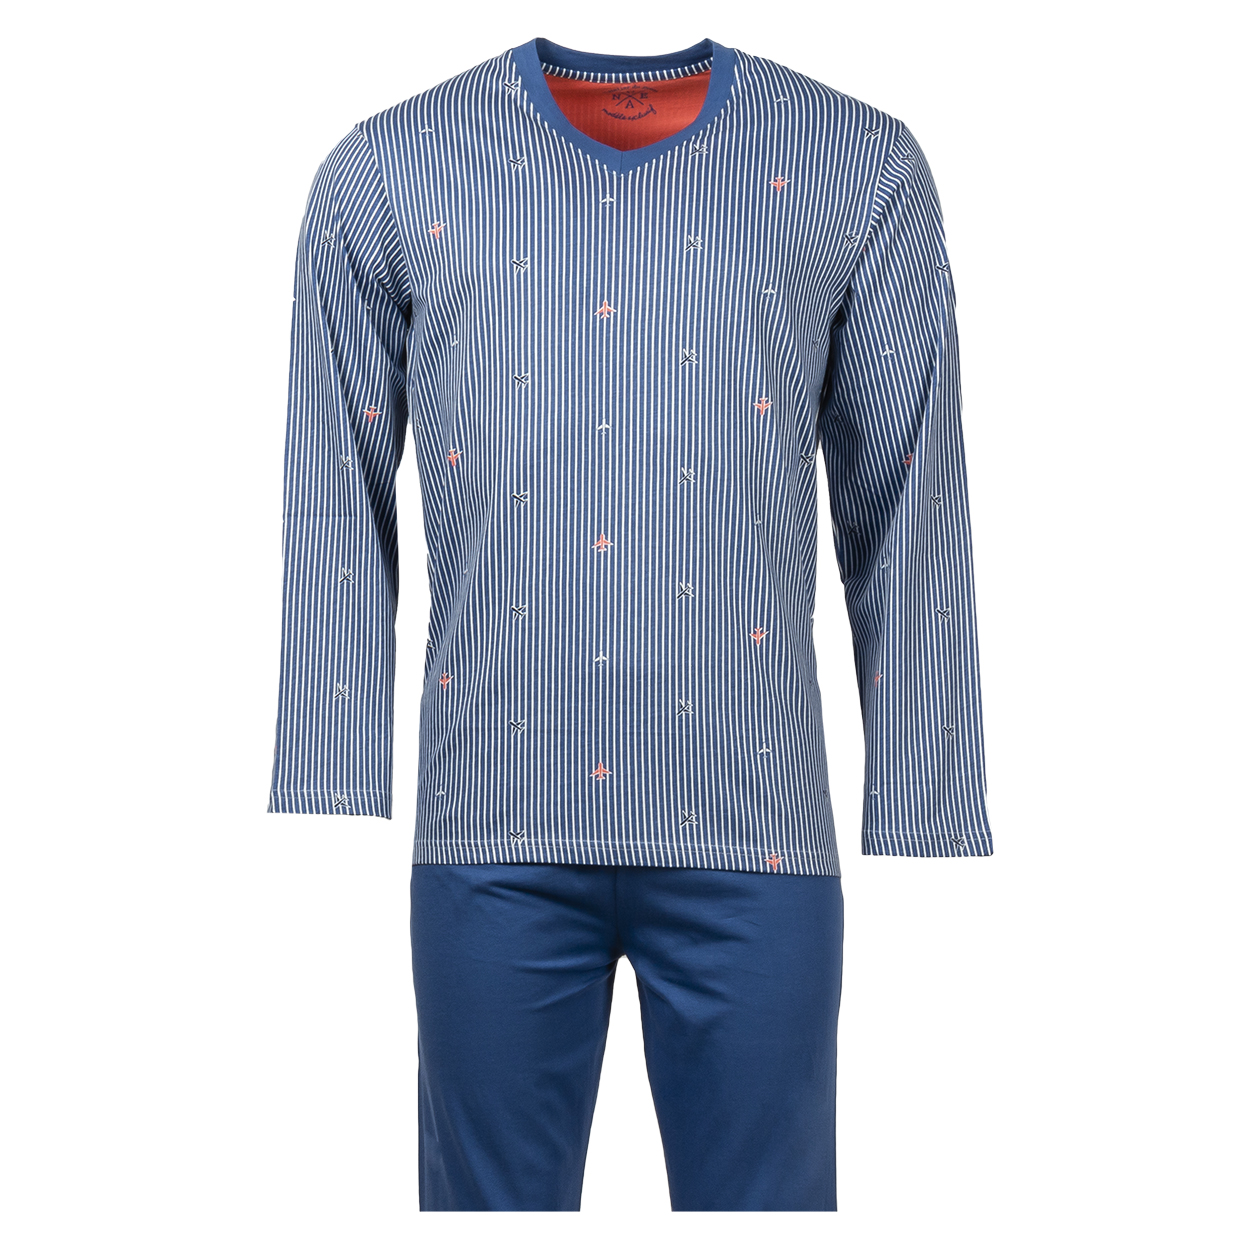 Pyjama long Christian Cane Wind en coton tee-shirt bleu indigo à rayures blanches et motifs avions b